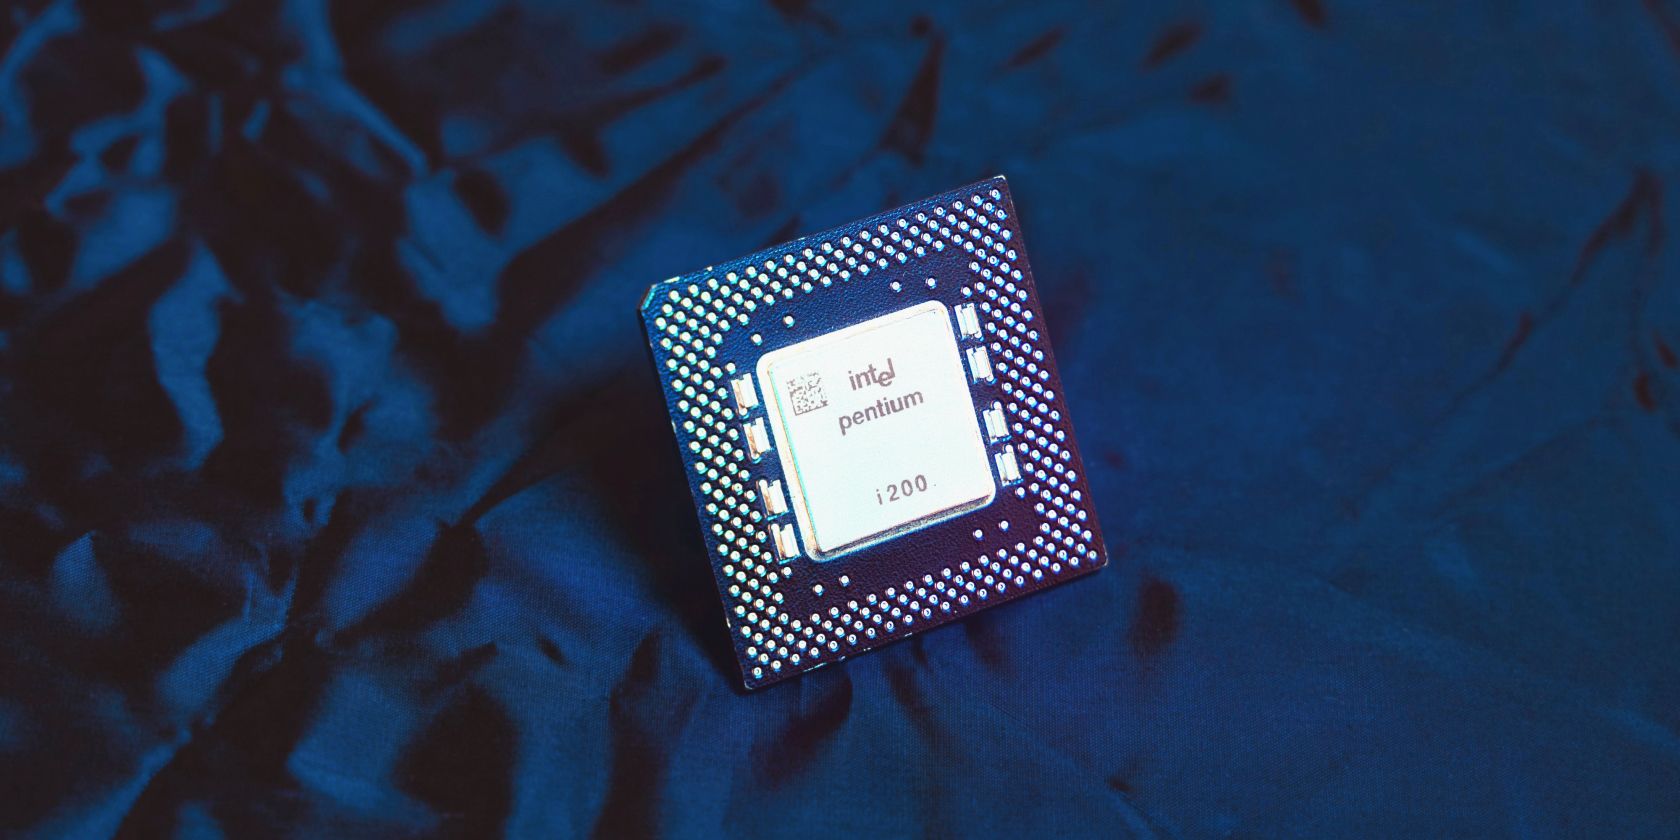 Процессор Intel Pentium 1200 на синем бархатном фоне